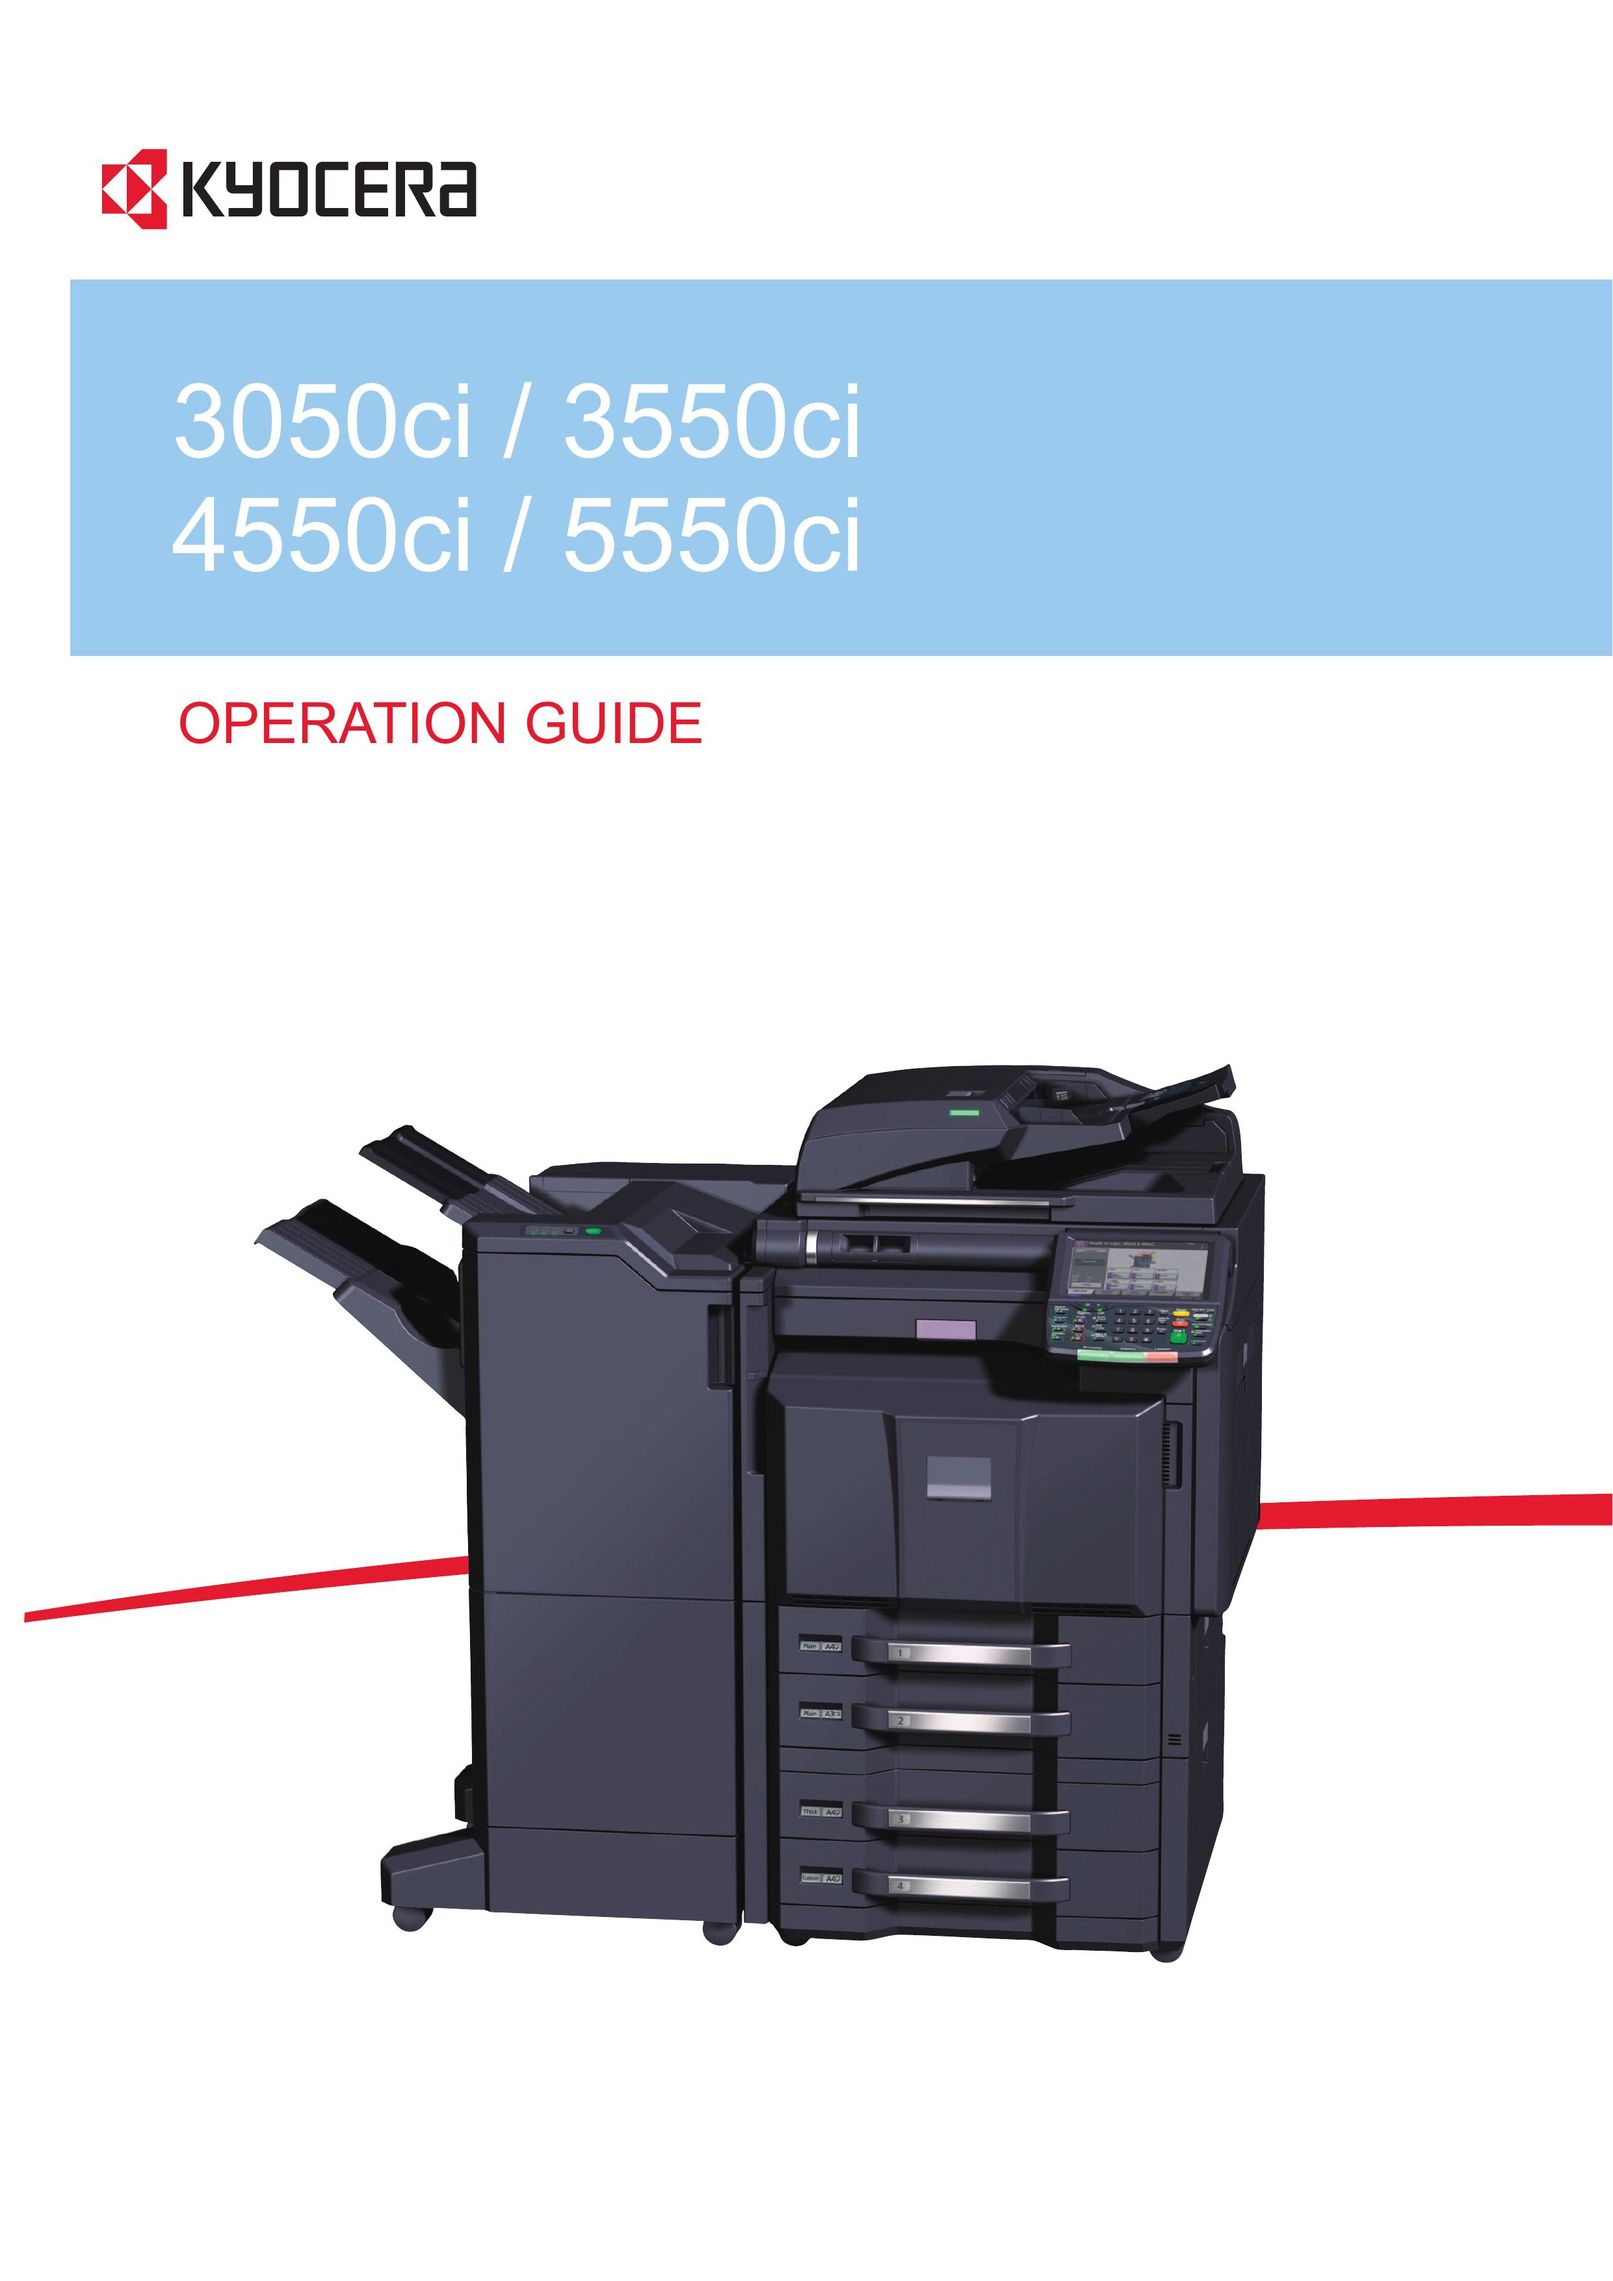 Kyocera 5550ci All in One Printer User Manual